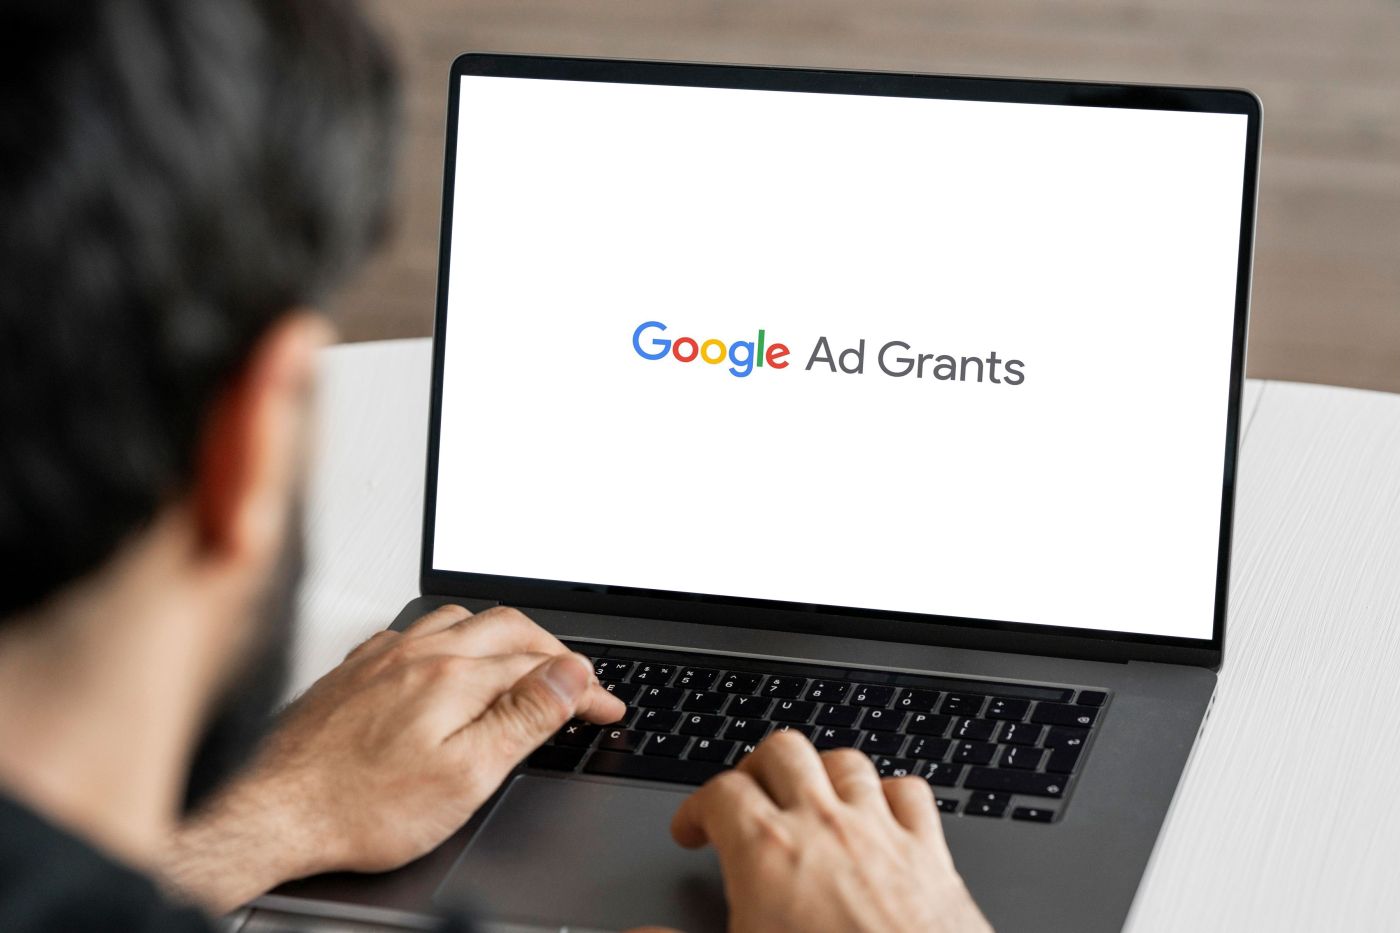 Google Ads for nonprofits